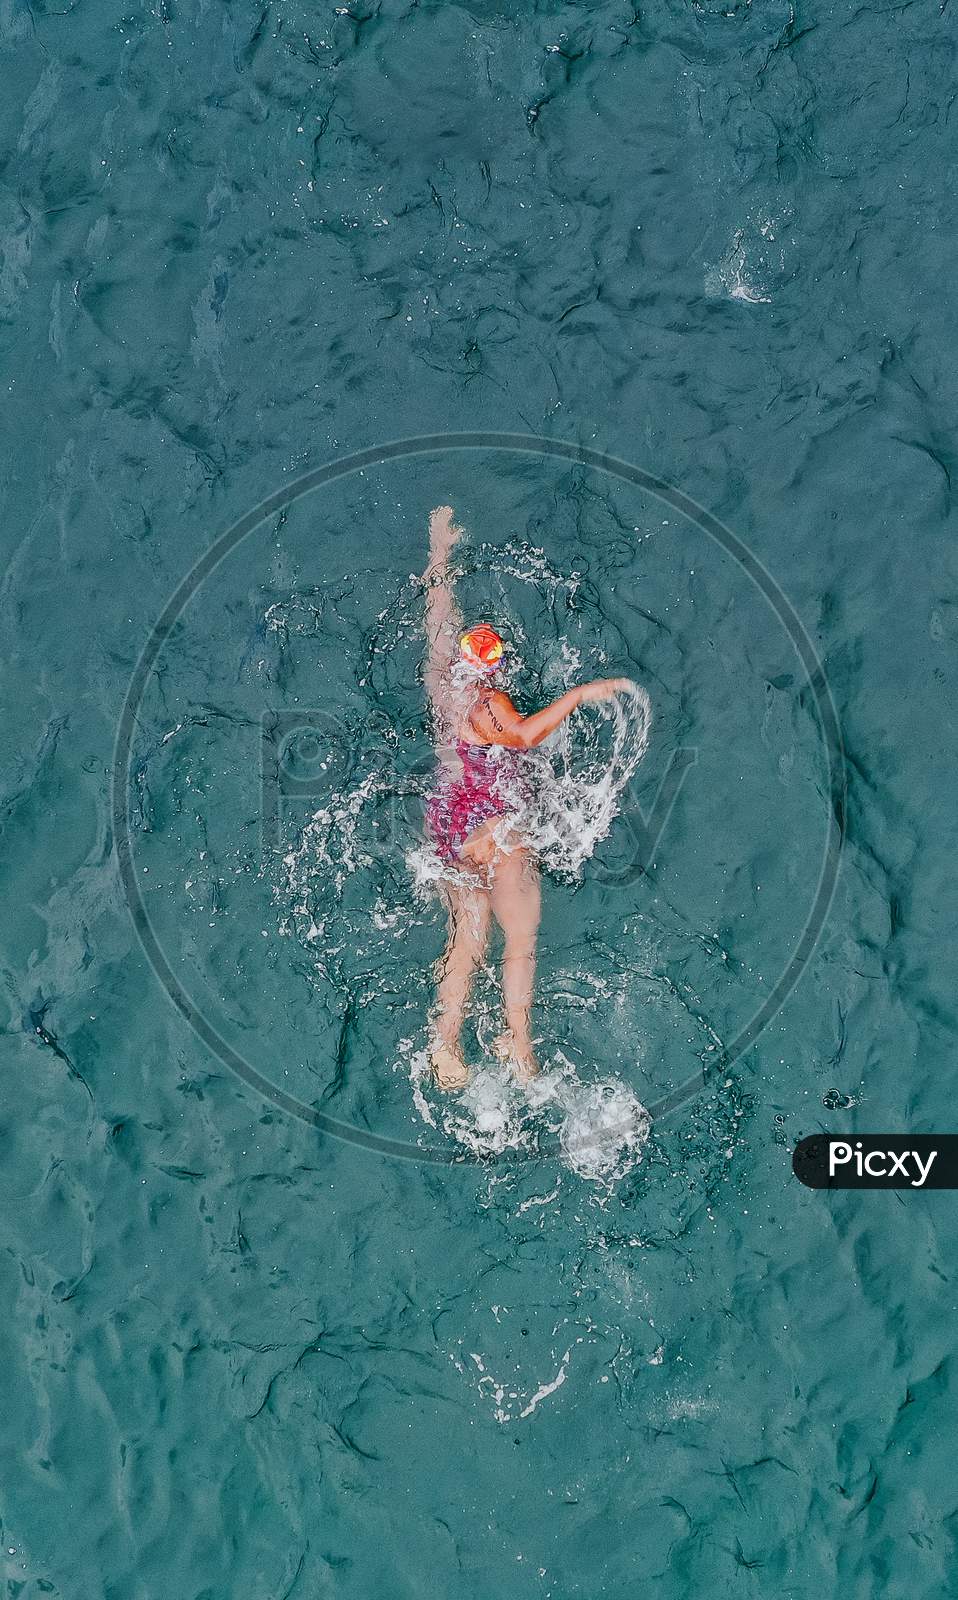 Women swimming professionally in seawater.